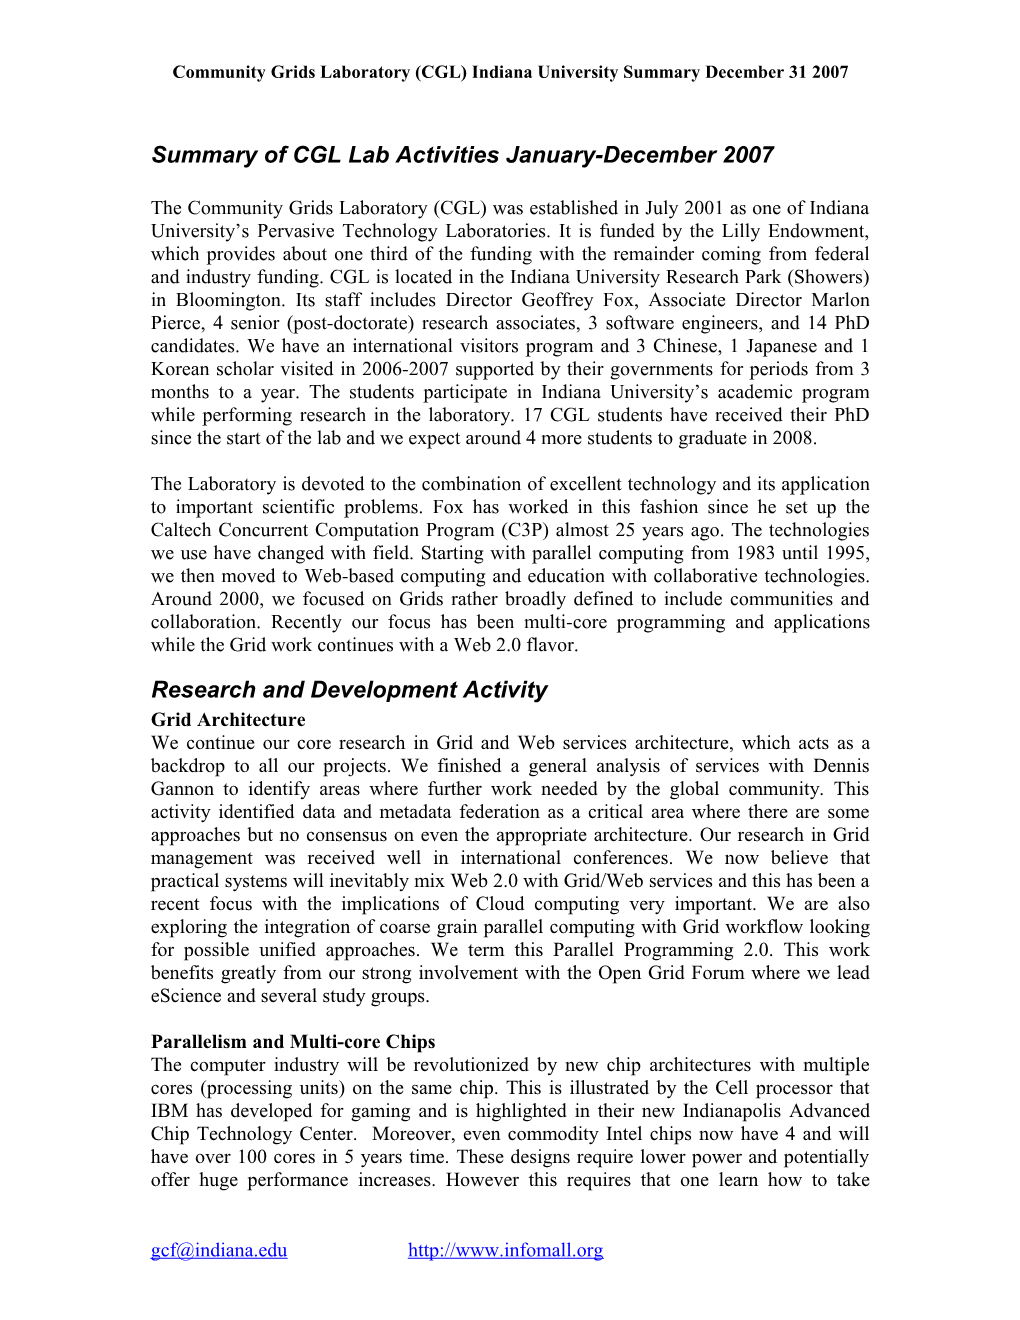 Summary of Key Lab Activities January-June 2007